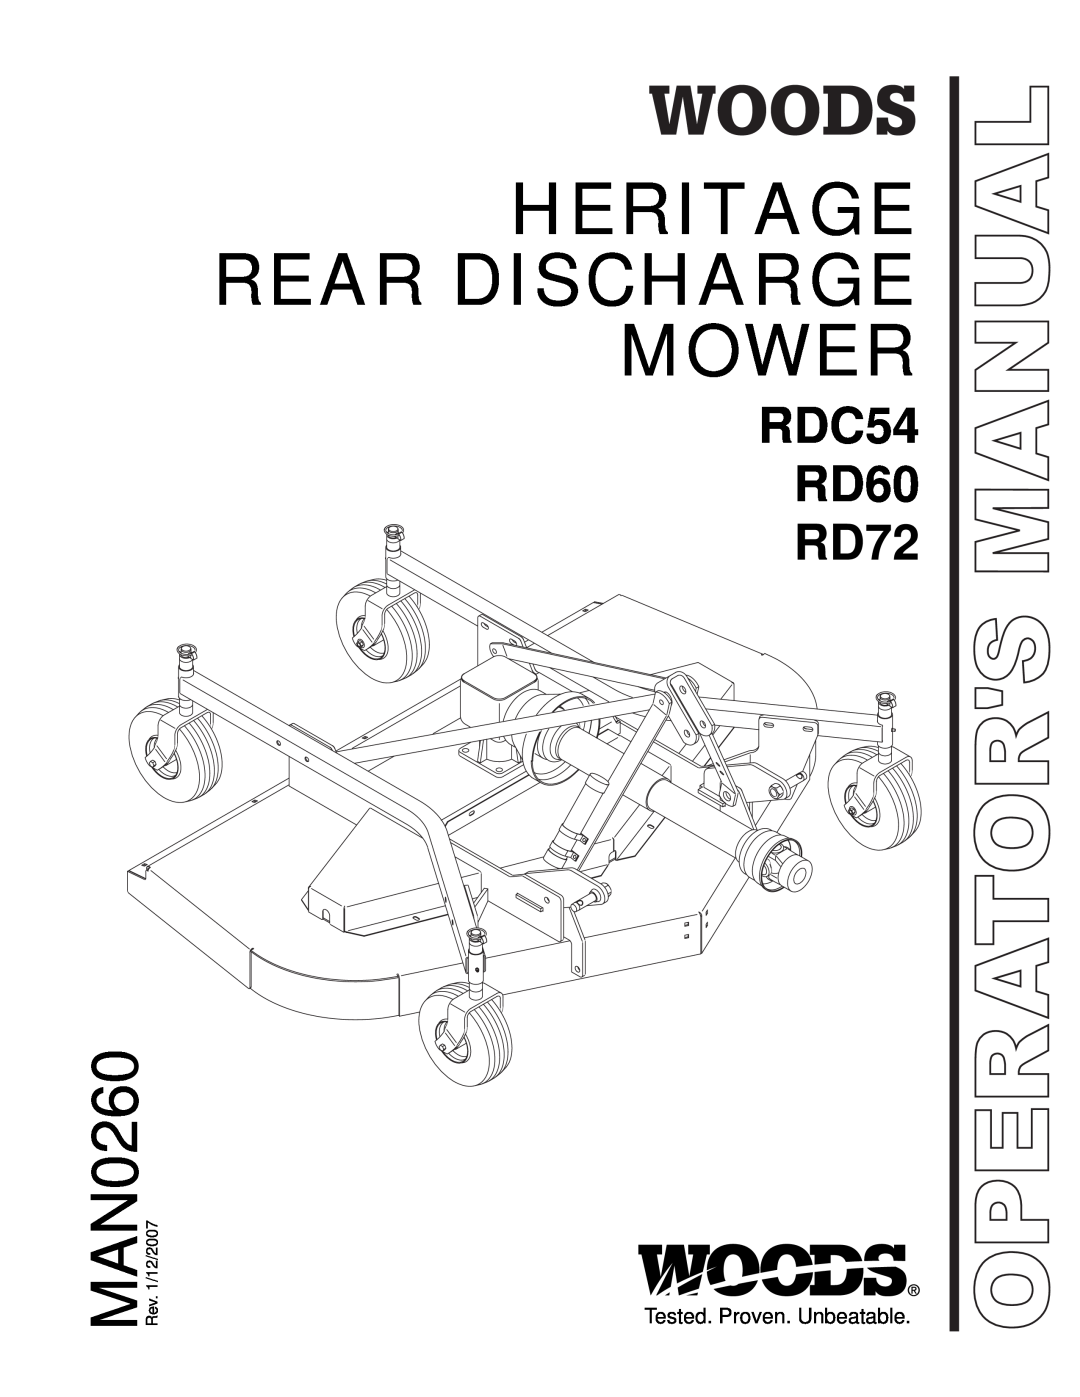 Woods Equipment manual Heritage Rear Discharge Mower, RDC54 RD60 RD72, MAN0260, Operators Manual 